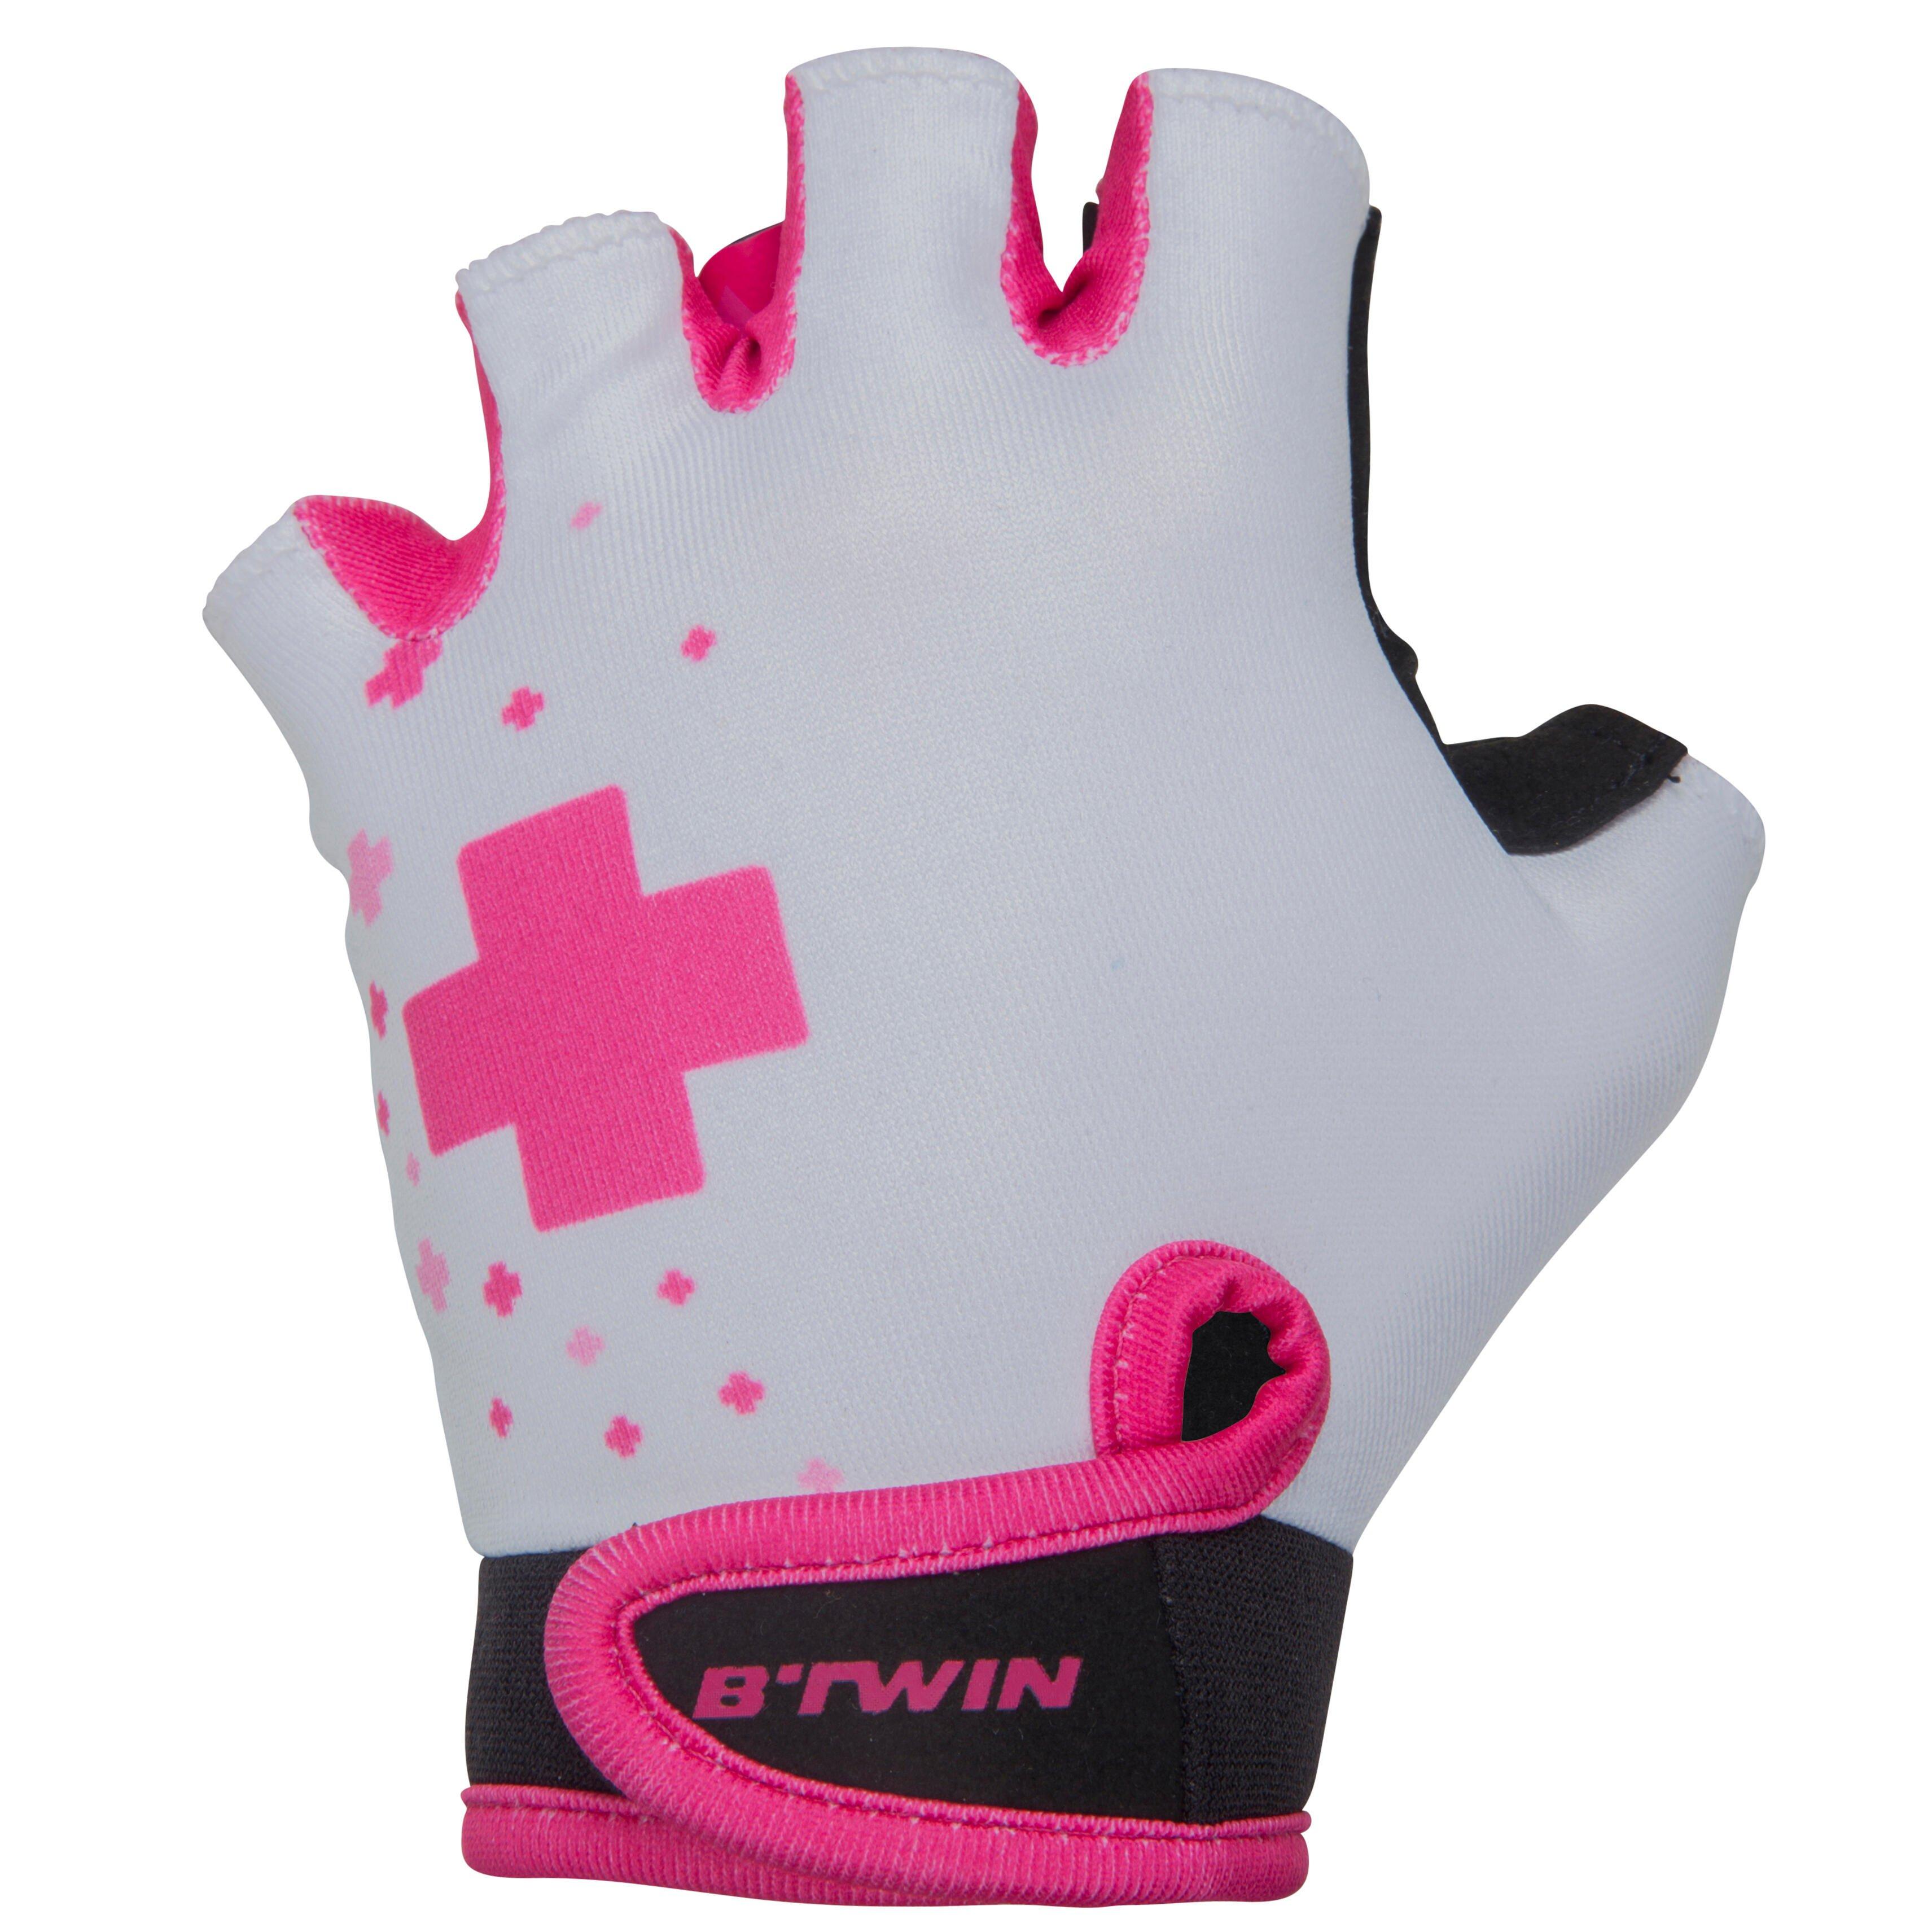 Decathlon Fingerless Cycling Gloves - Doctogirl